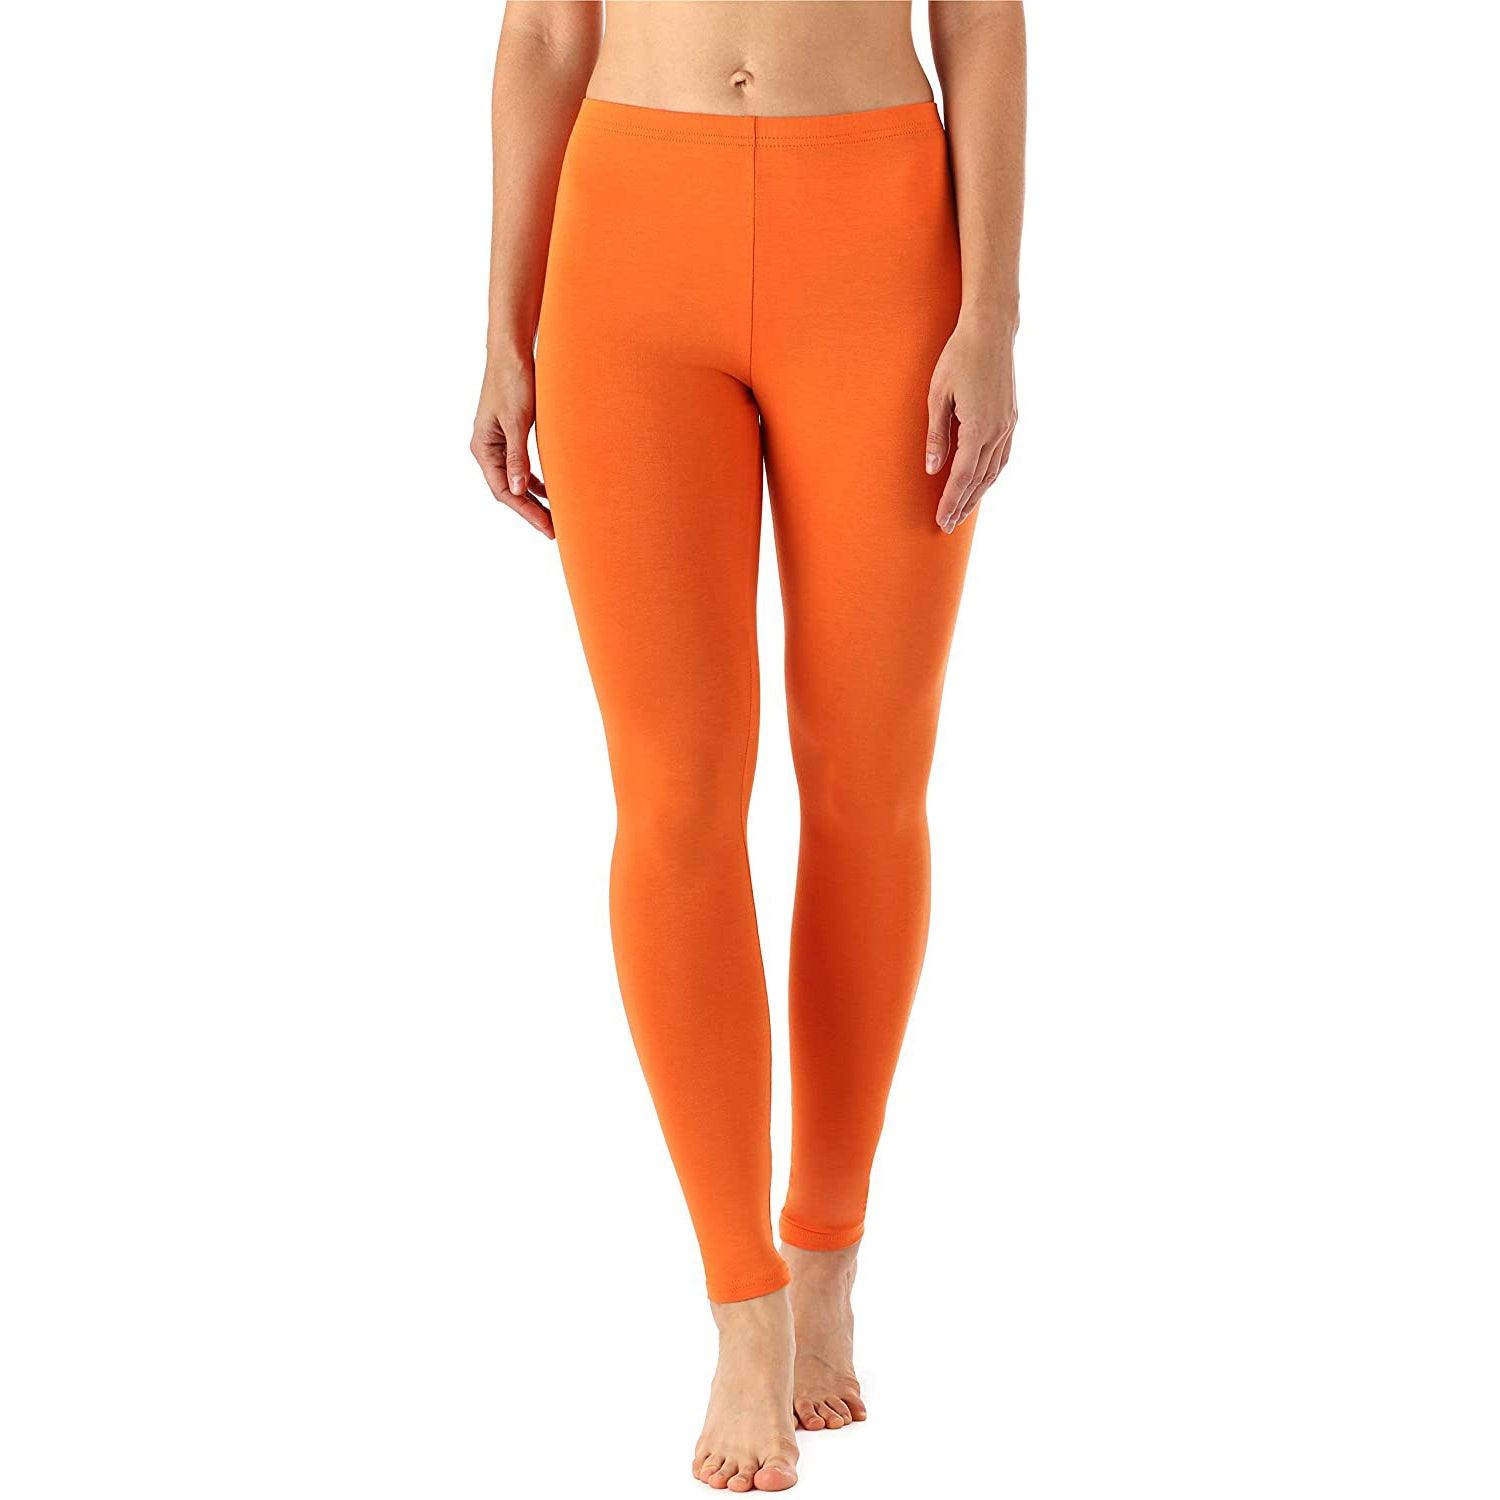 Zindwear Women's Cotton Soft Plain Summer Stretchy Ankle Length Leggings (One Size, Orange) - Walgrow.com